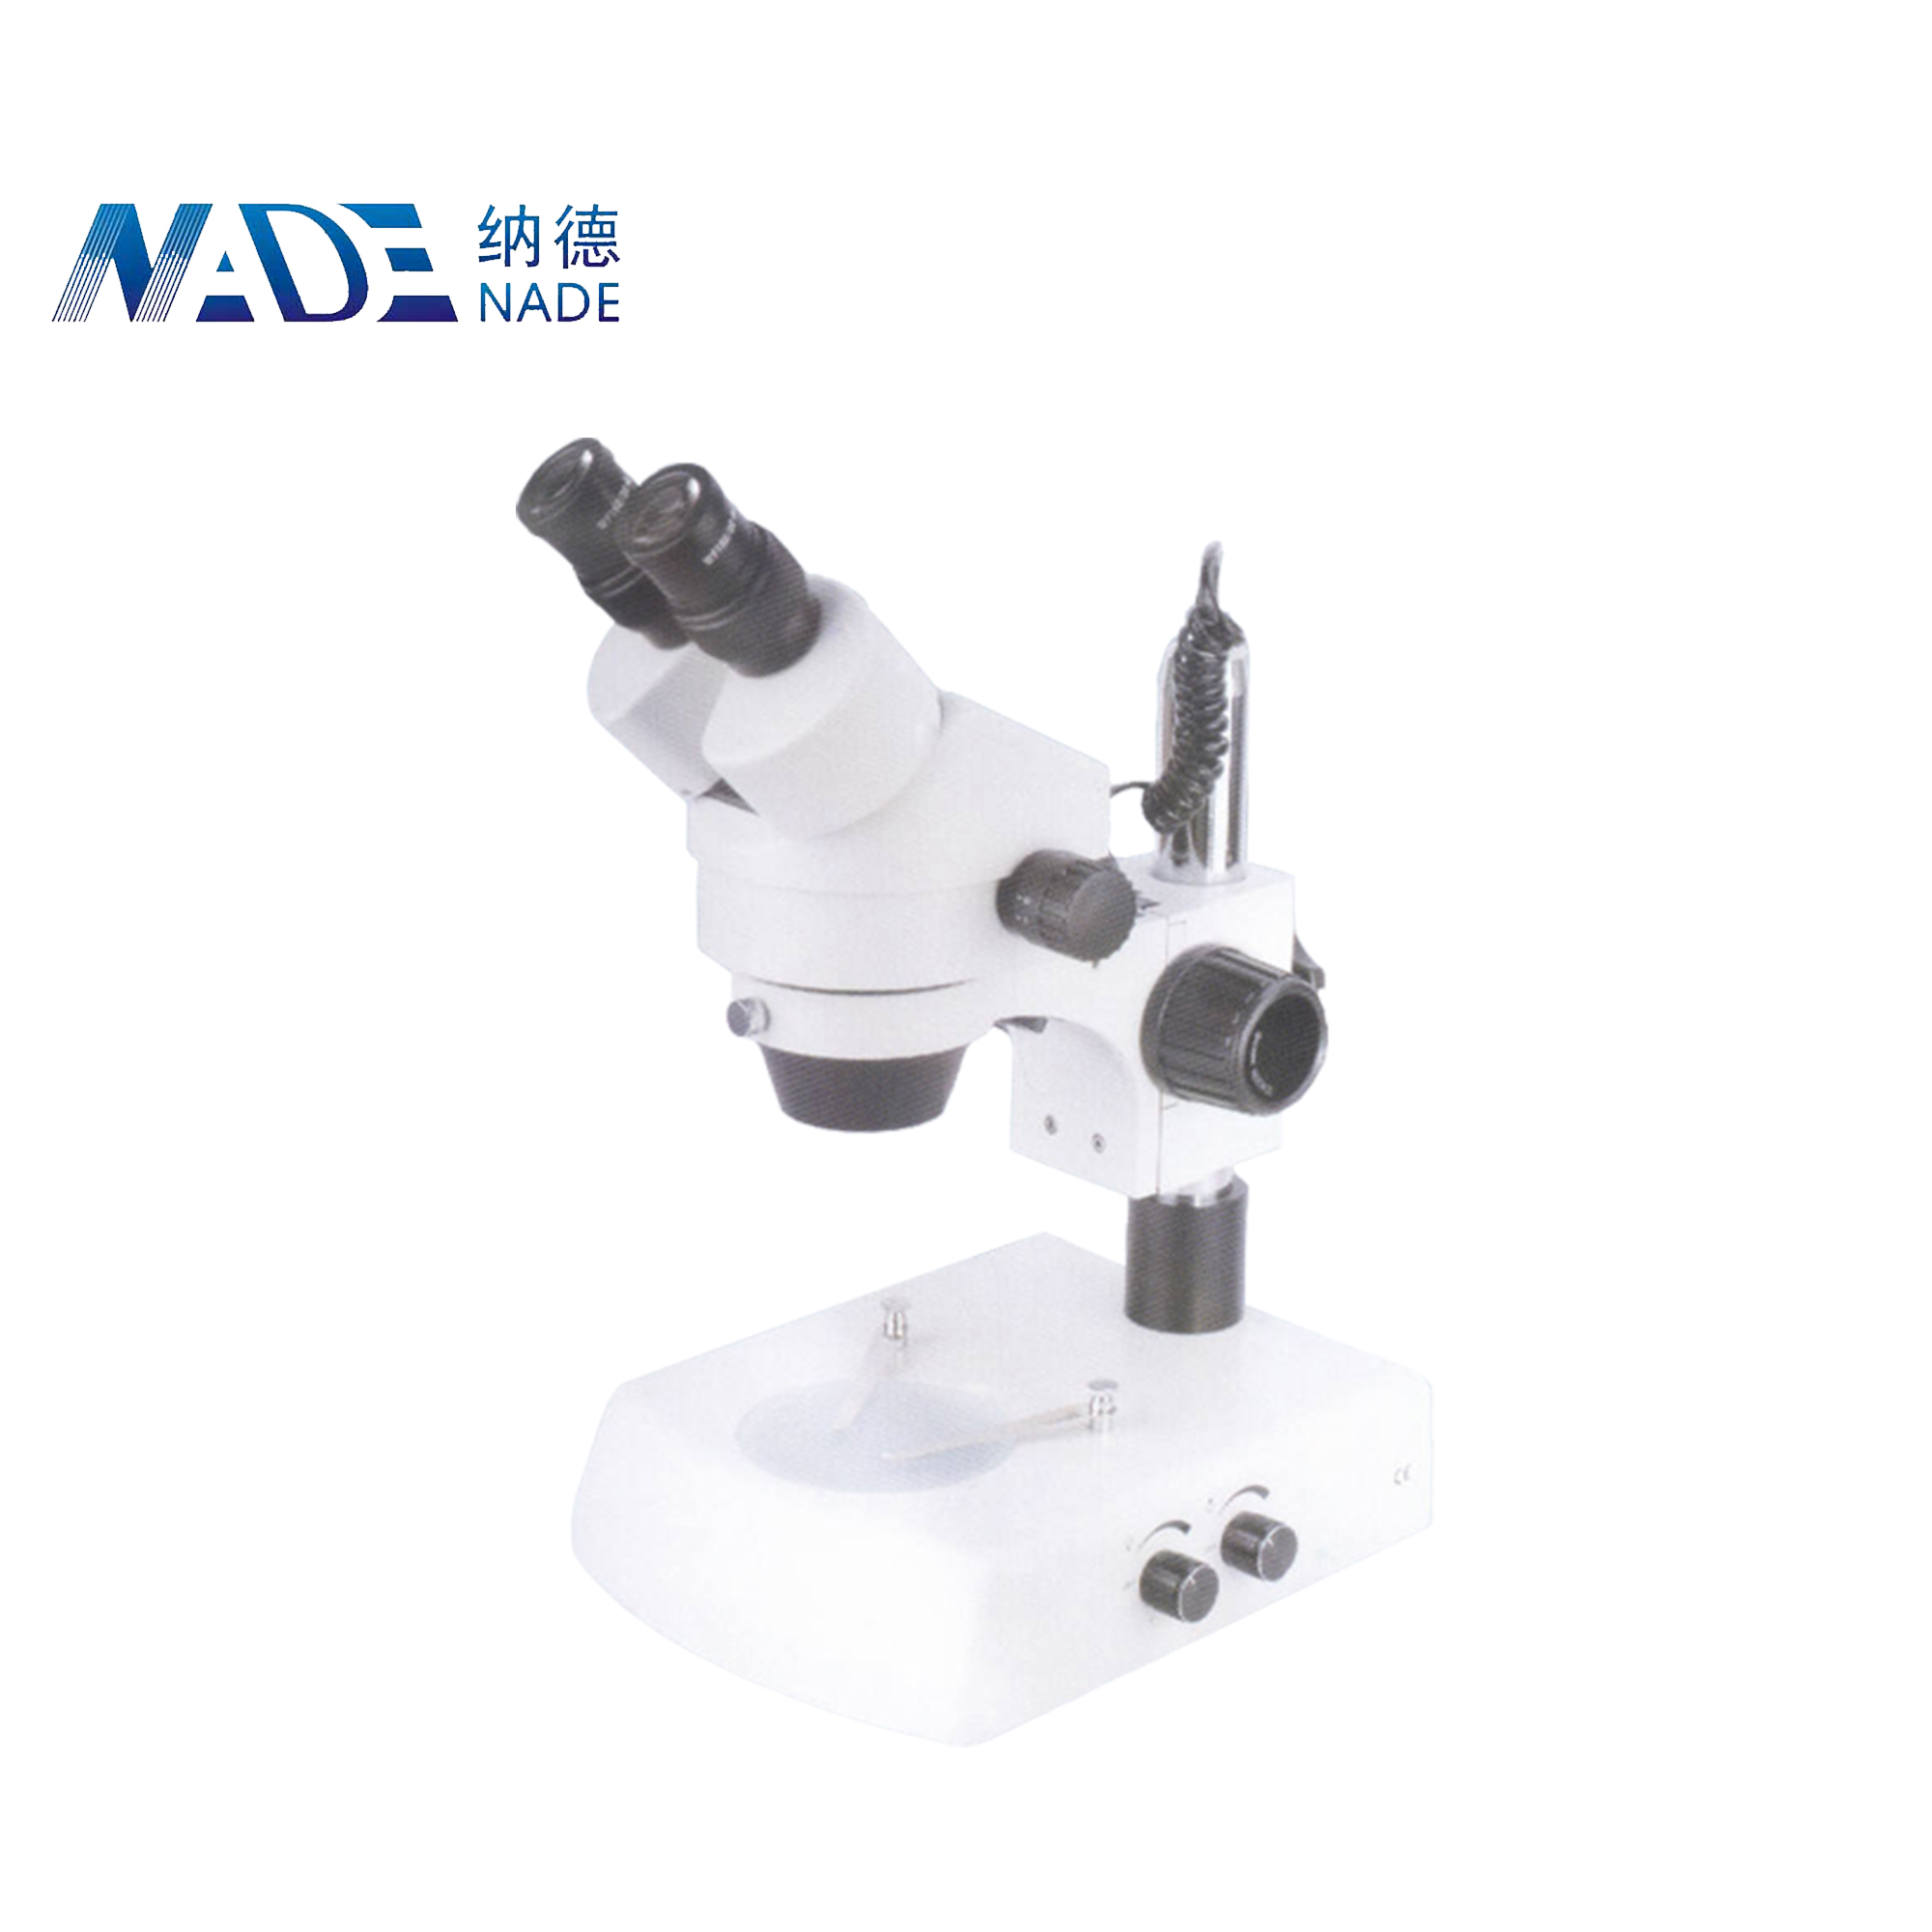 Nade Lab Microscope NTB-4B binocular Zoom Stereo Microscope